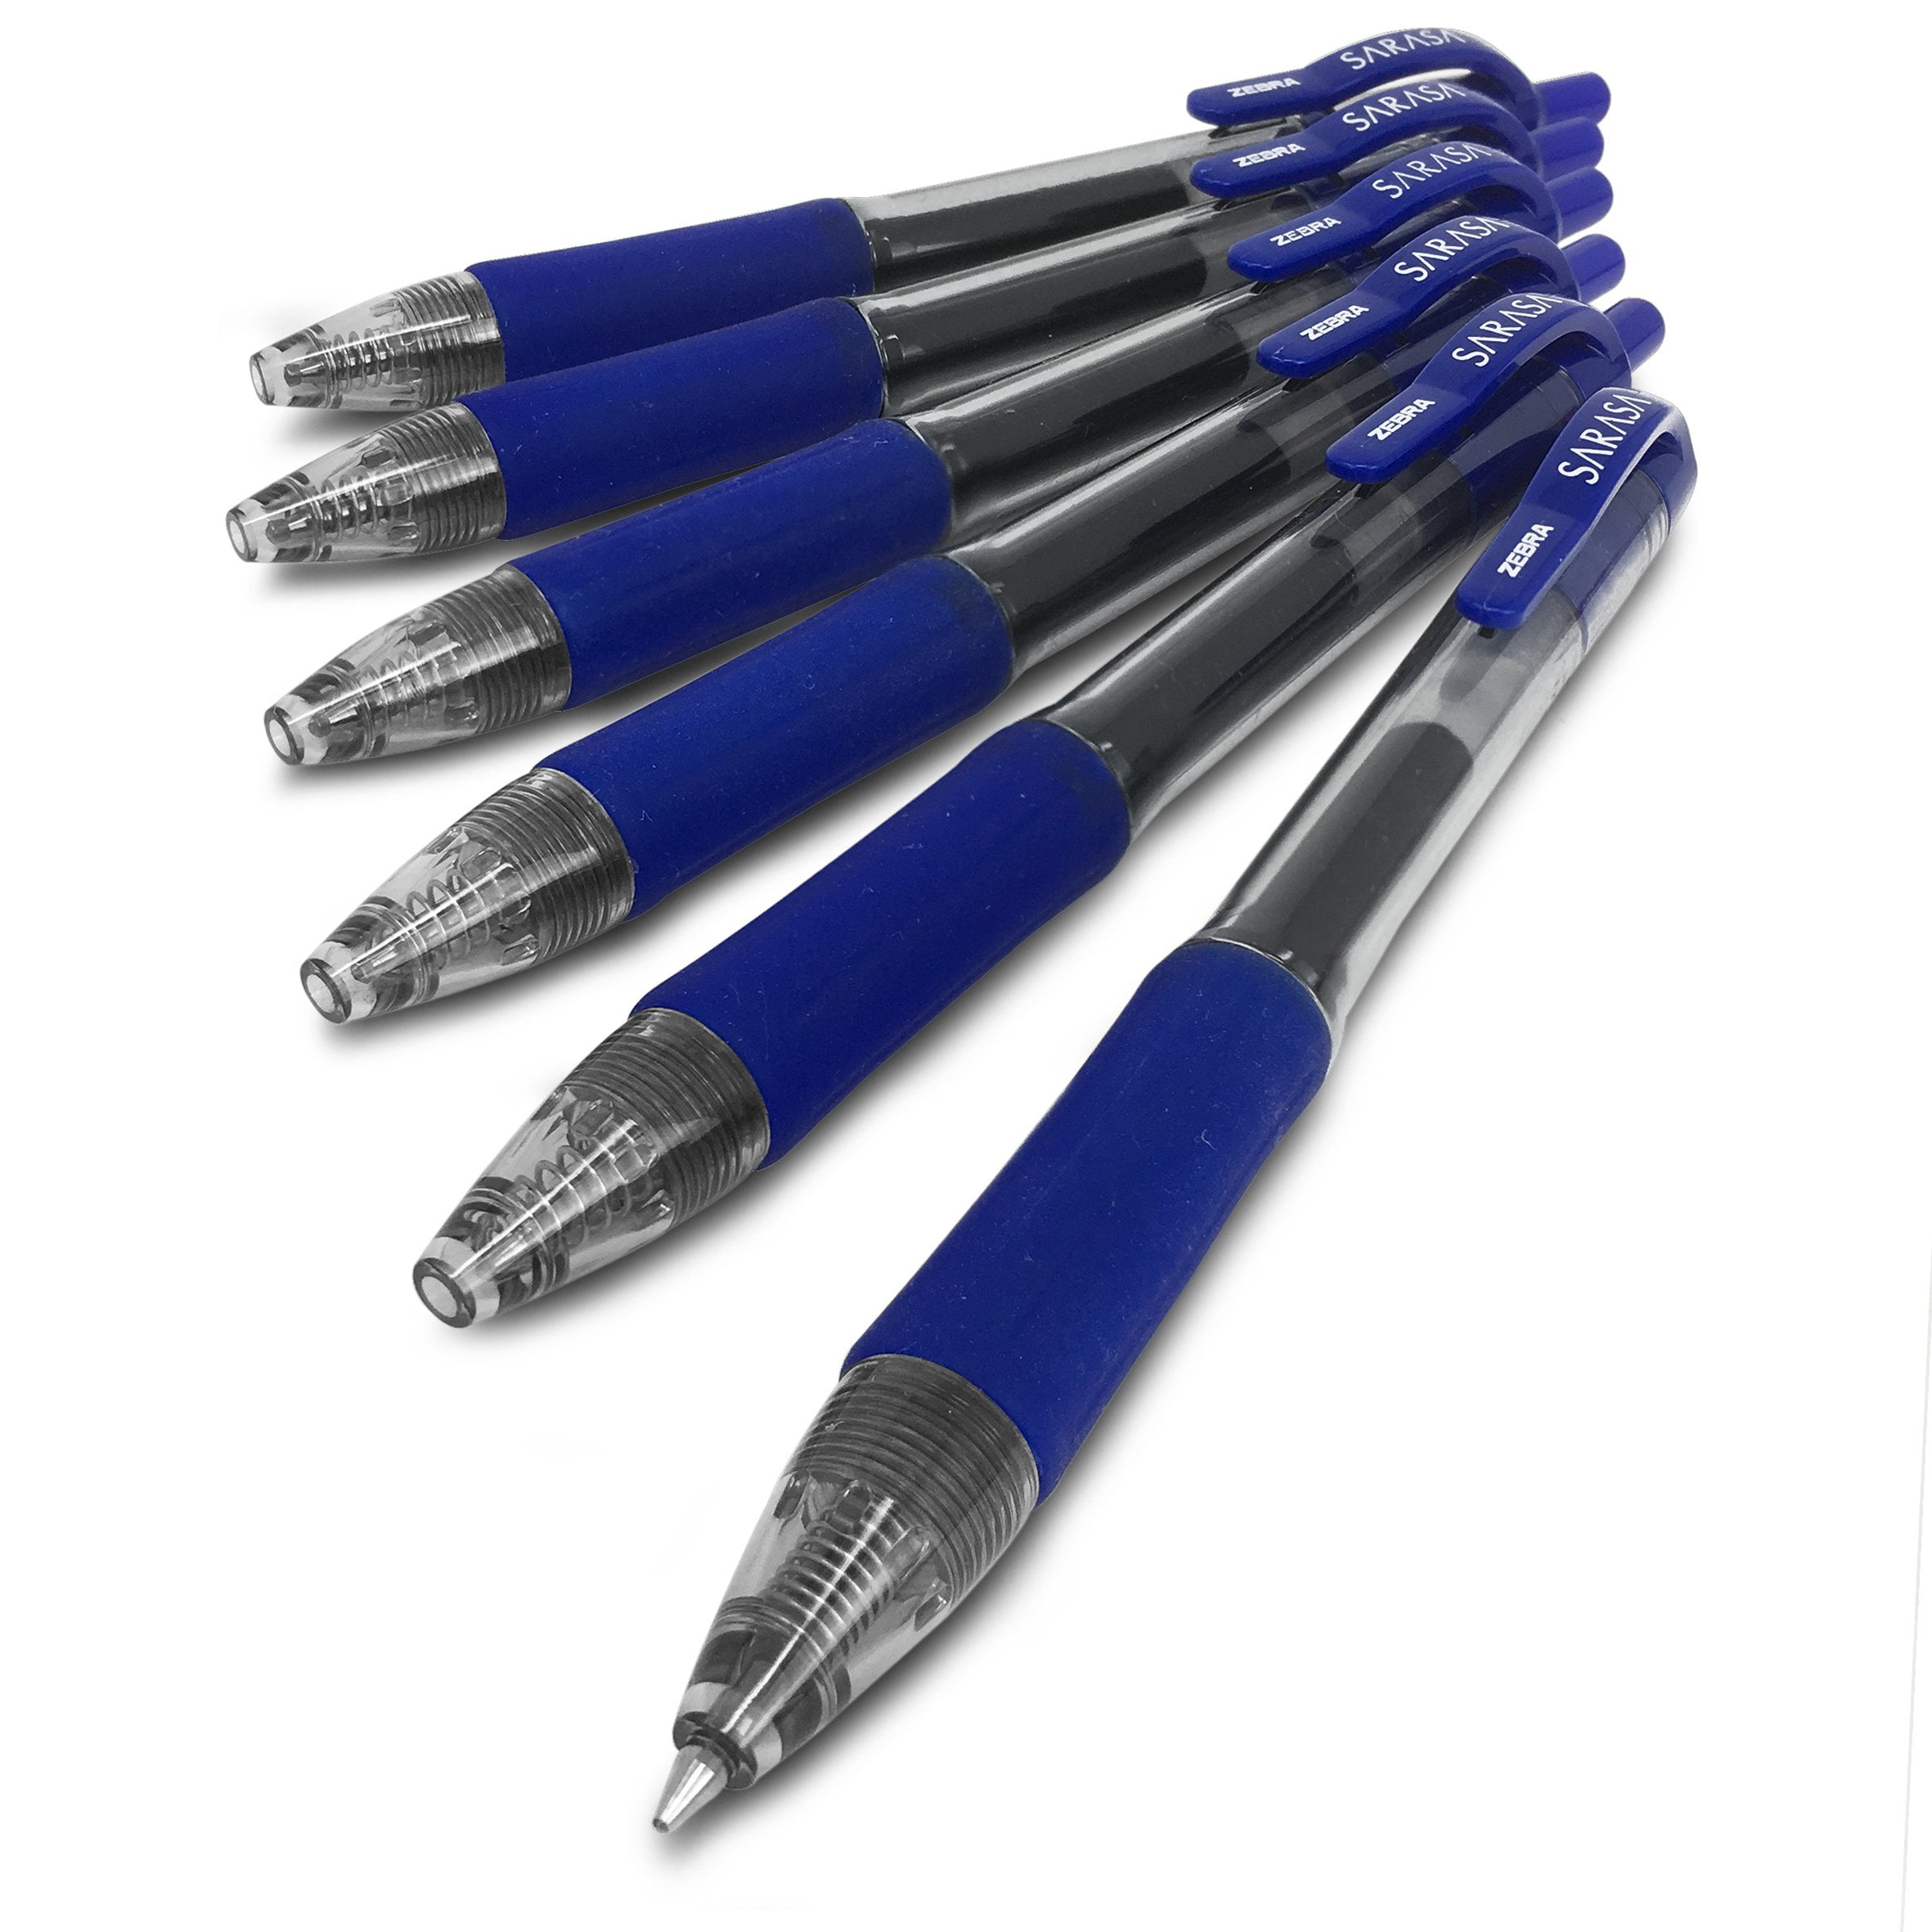 Zebra bLen Gel Pen Retractable .7mm Blue Ink - Wet Paint Artists' Materials  and Framing